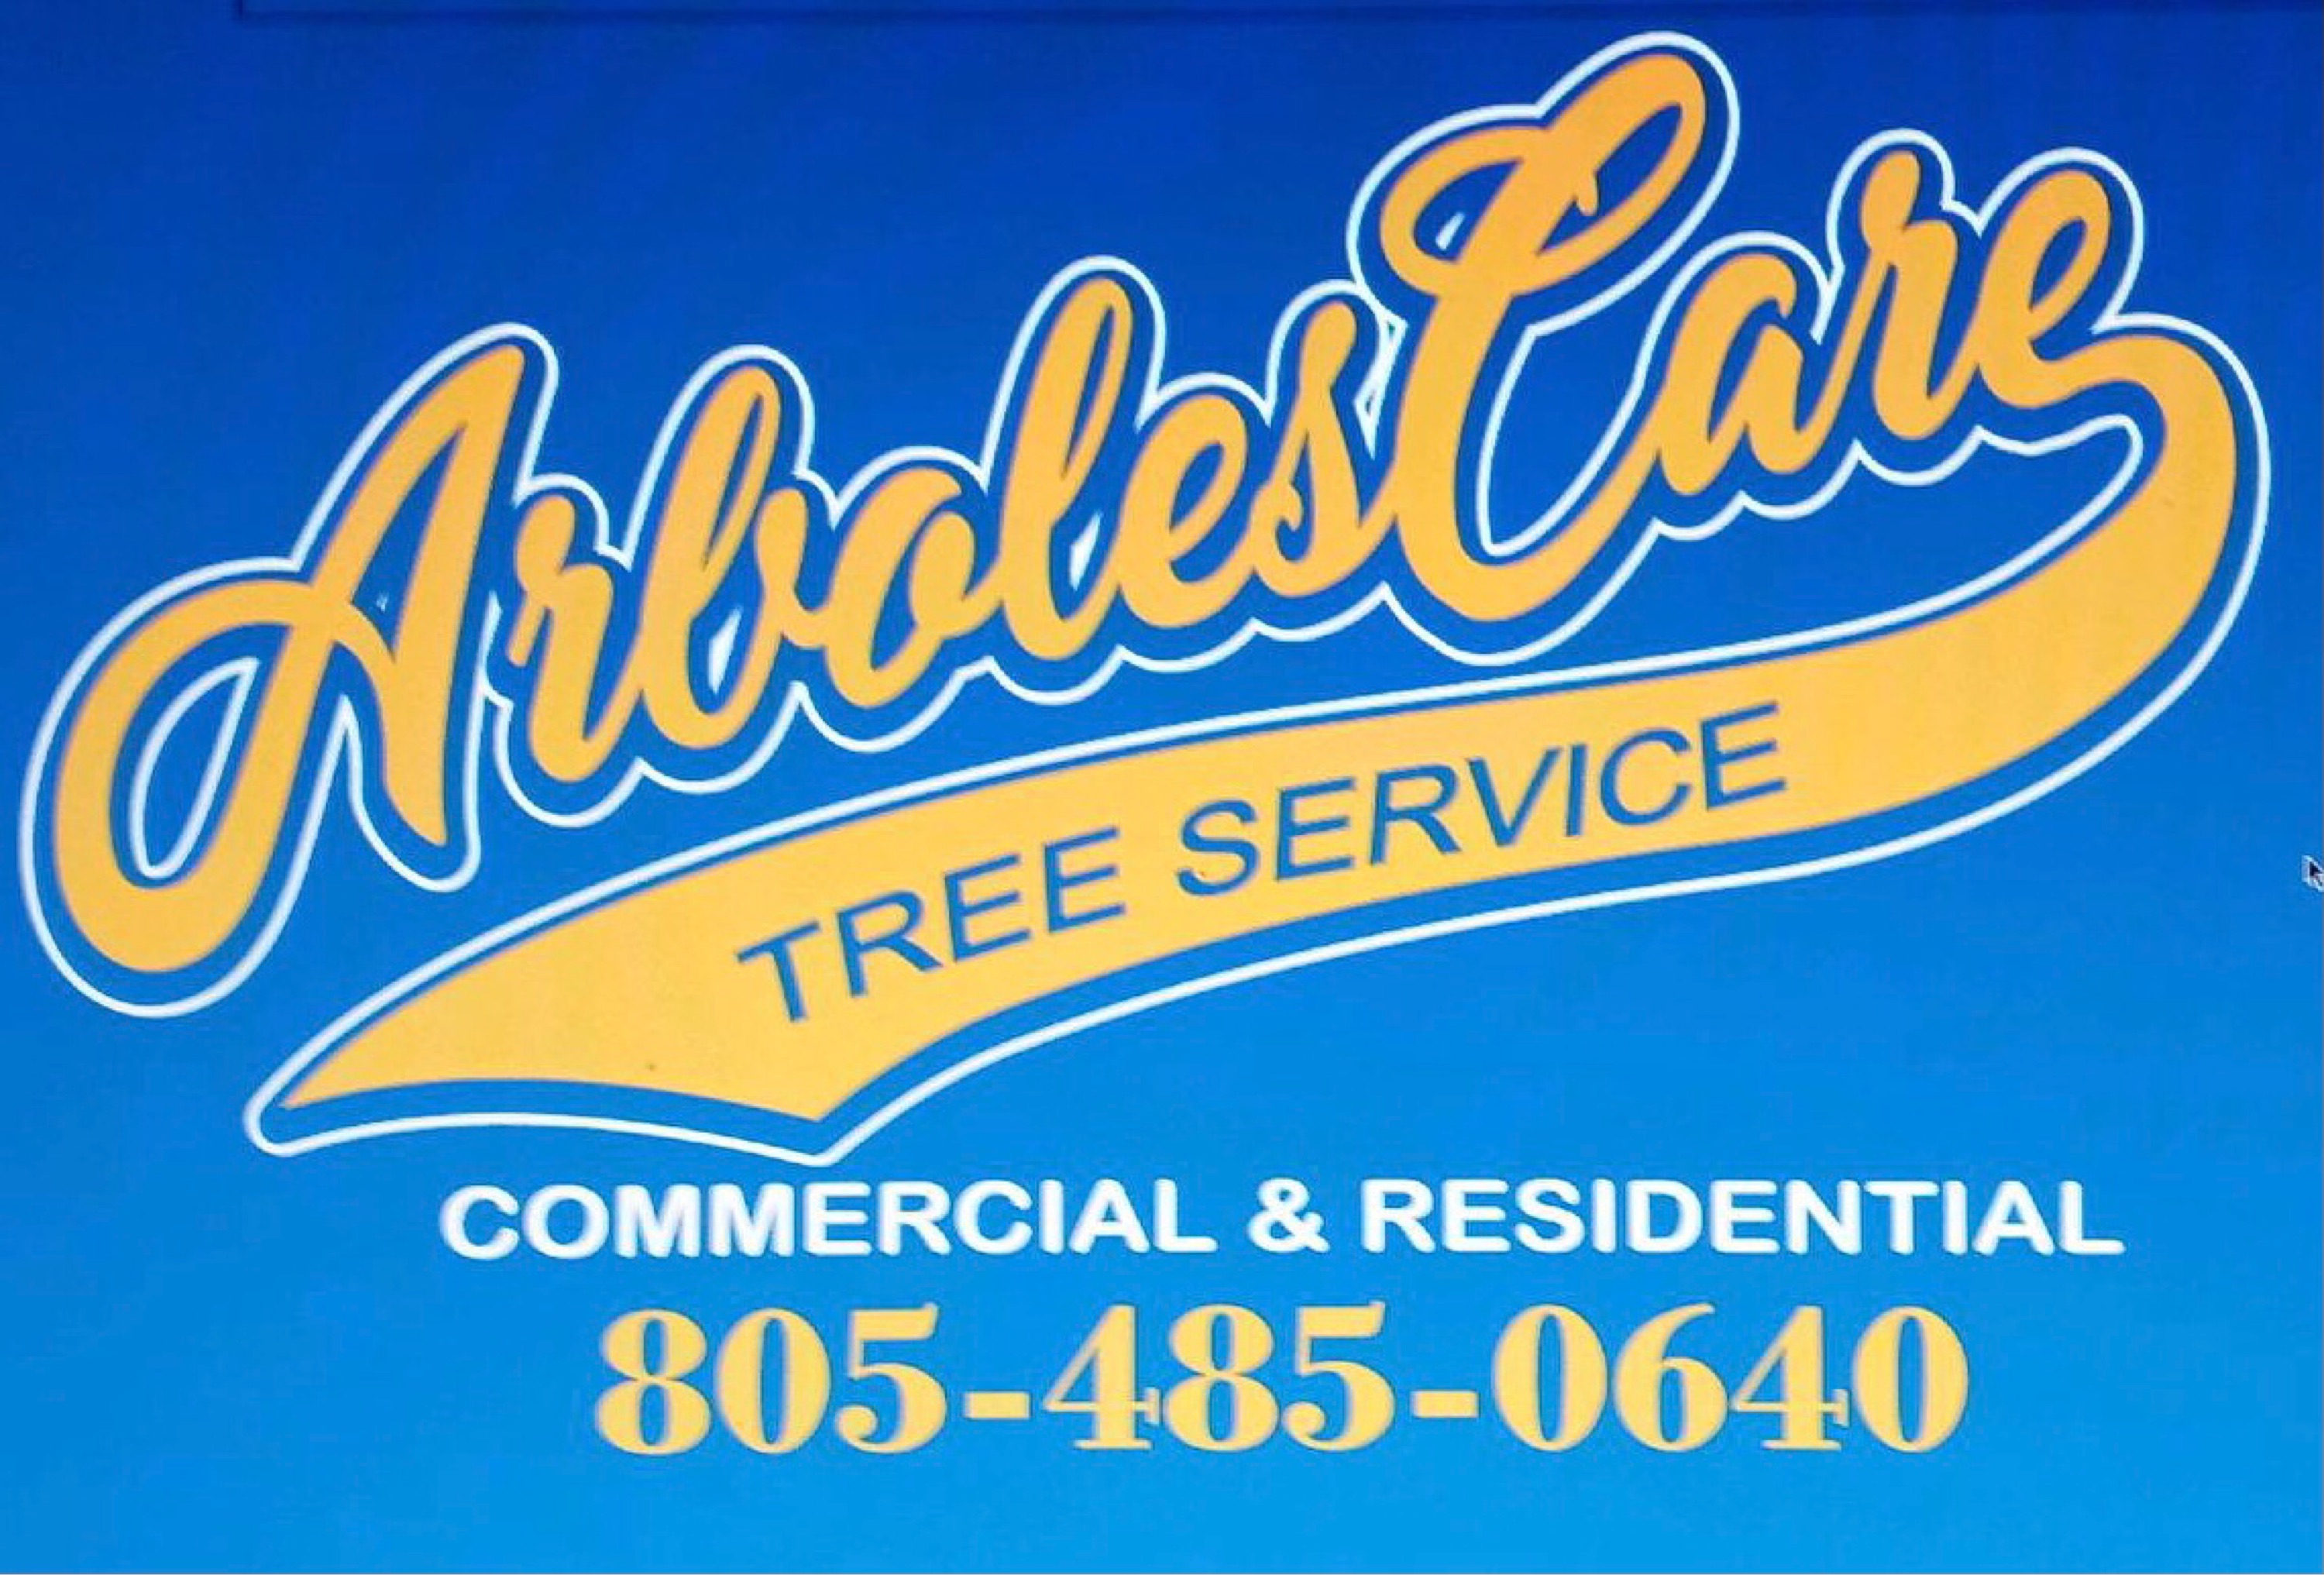 Arboles Care Tree Service, Inc. Logo